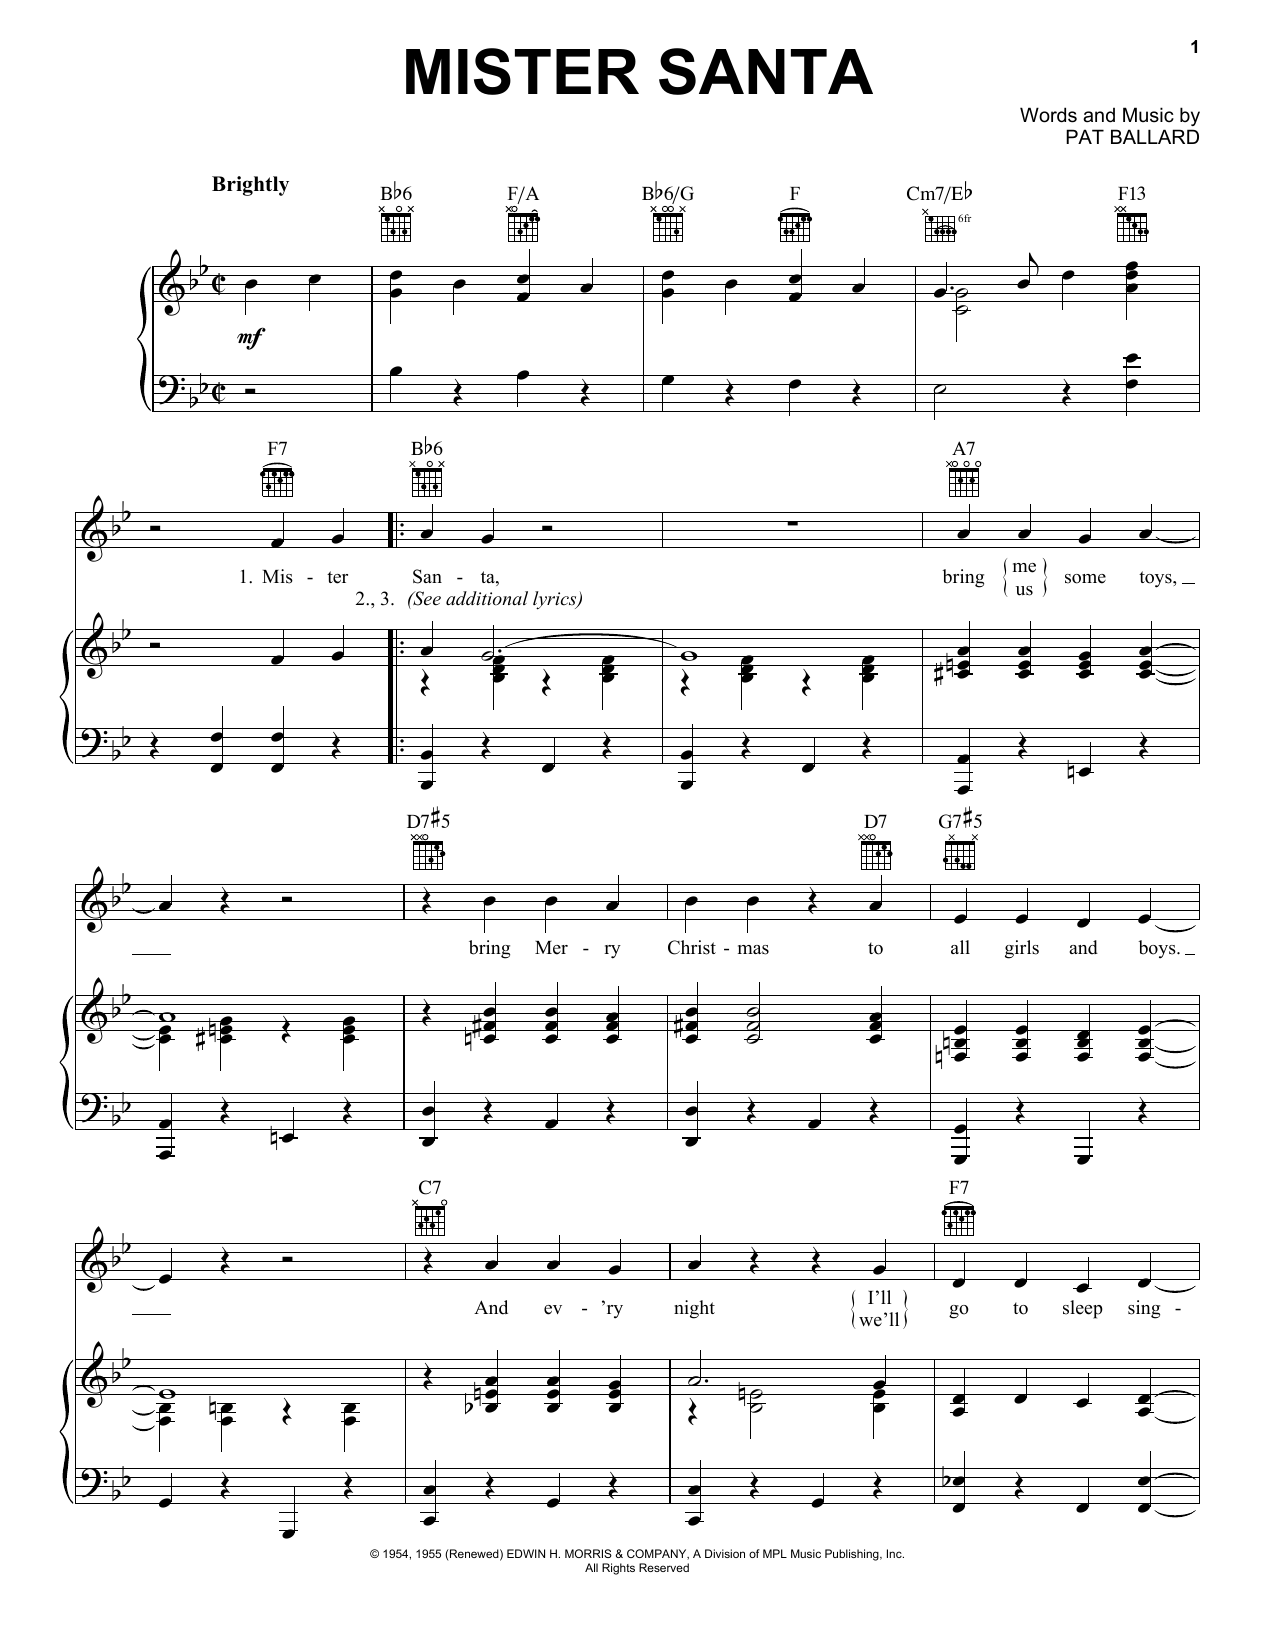 Pat Ballard Mister Santa Sheet Music Notes & Chords for 5-Finger Piano - Download or Print PDF